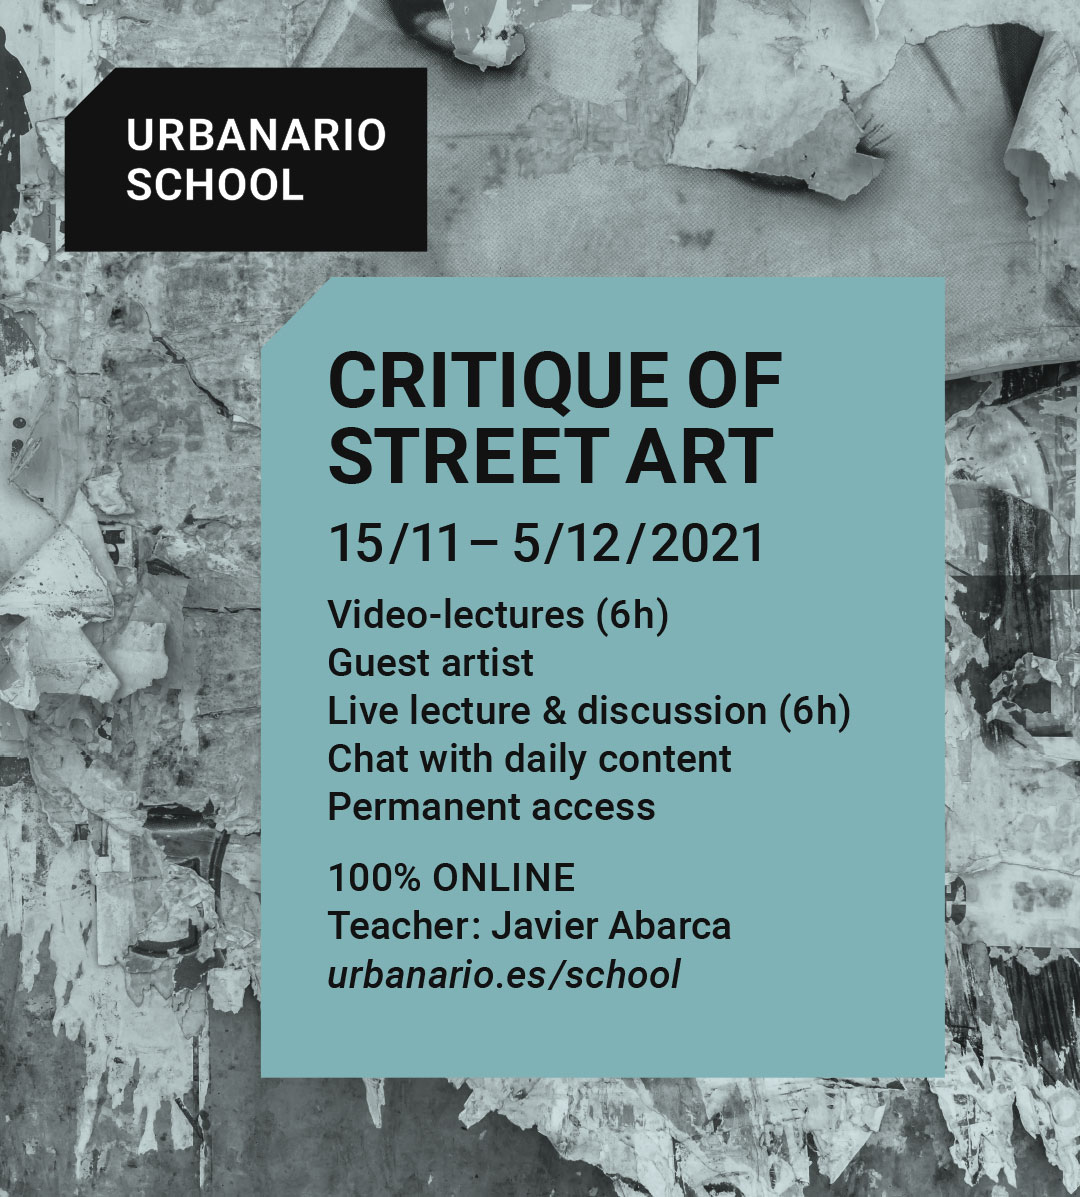 Critique of street art - Urbanario School